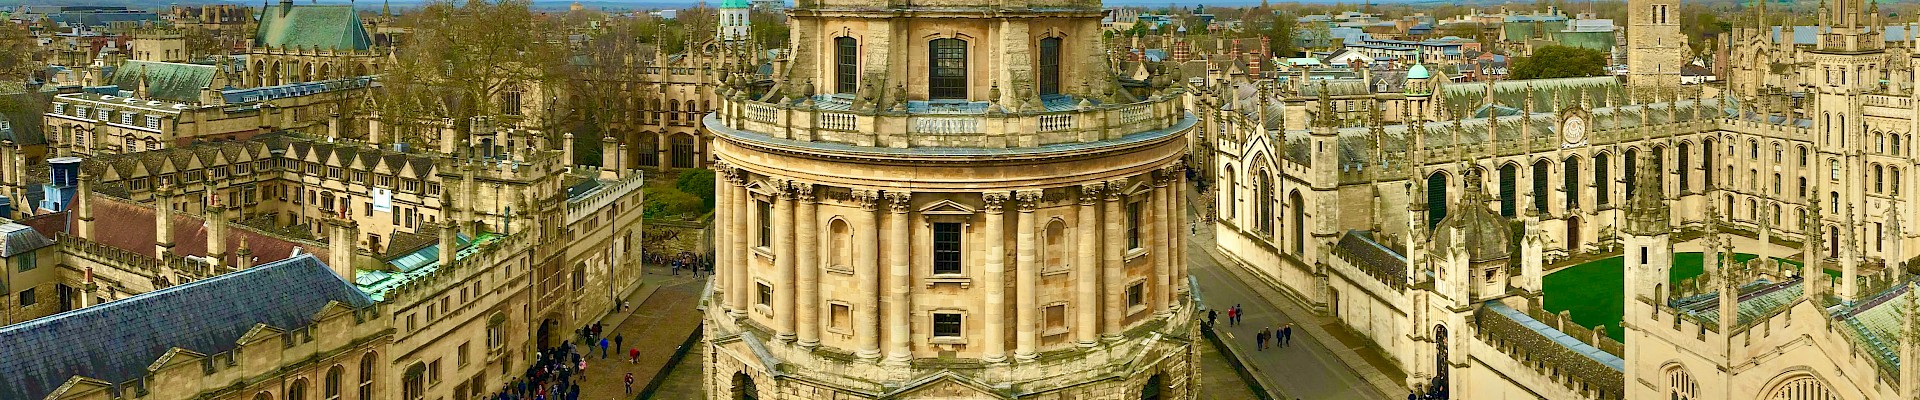 Oxford Photo